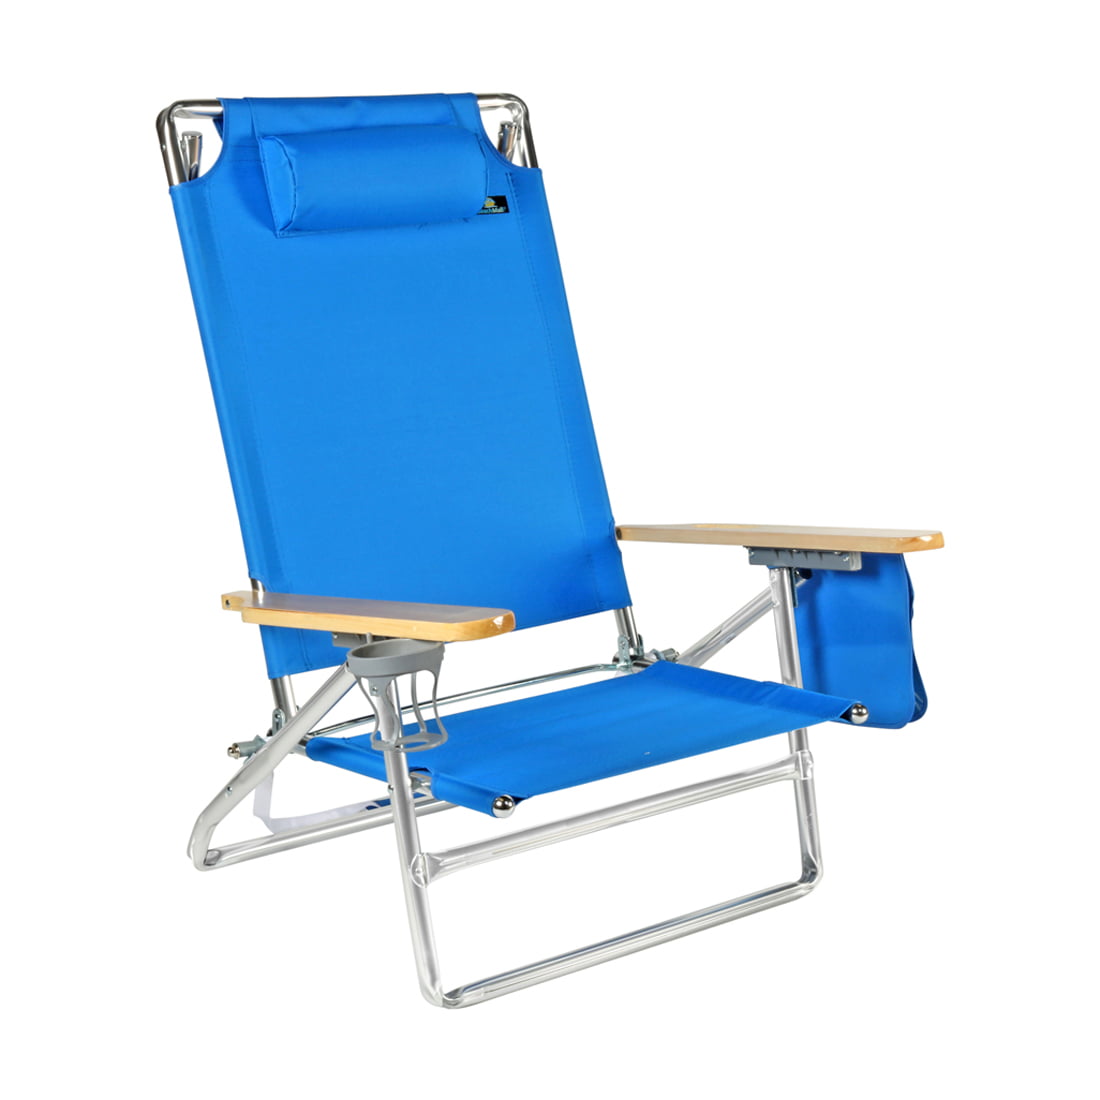 Minimalist Lie Flat Beach Chair for Simple Design